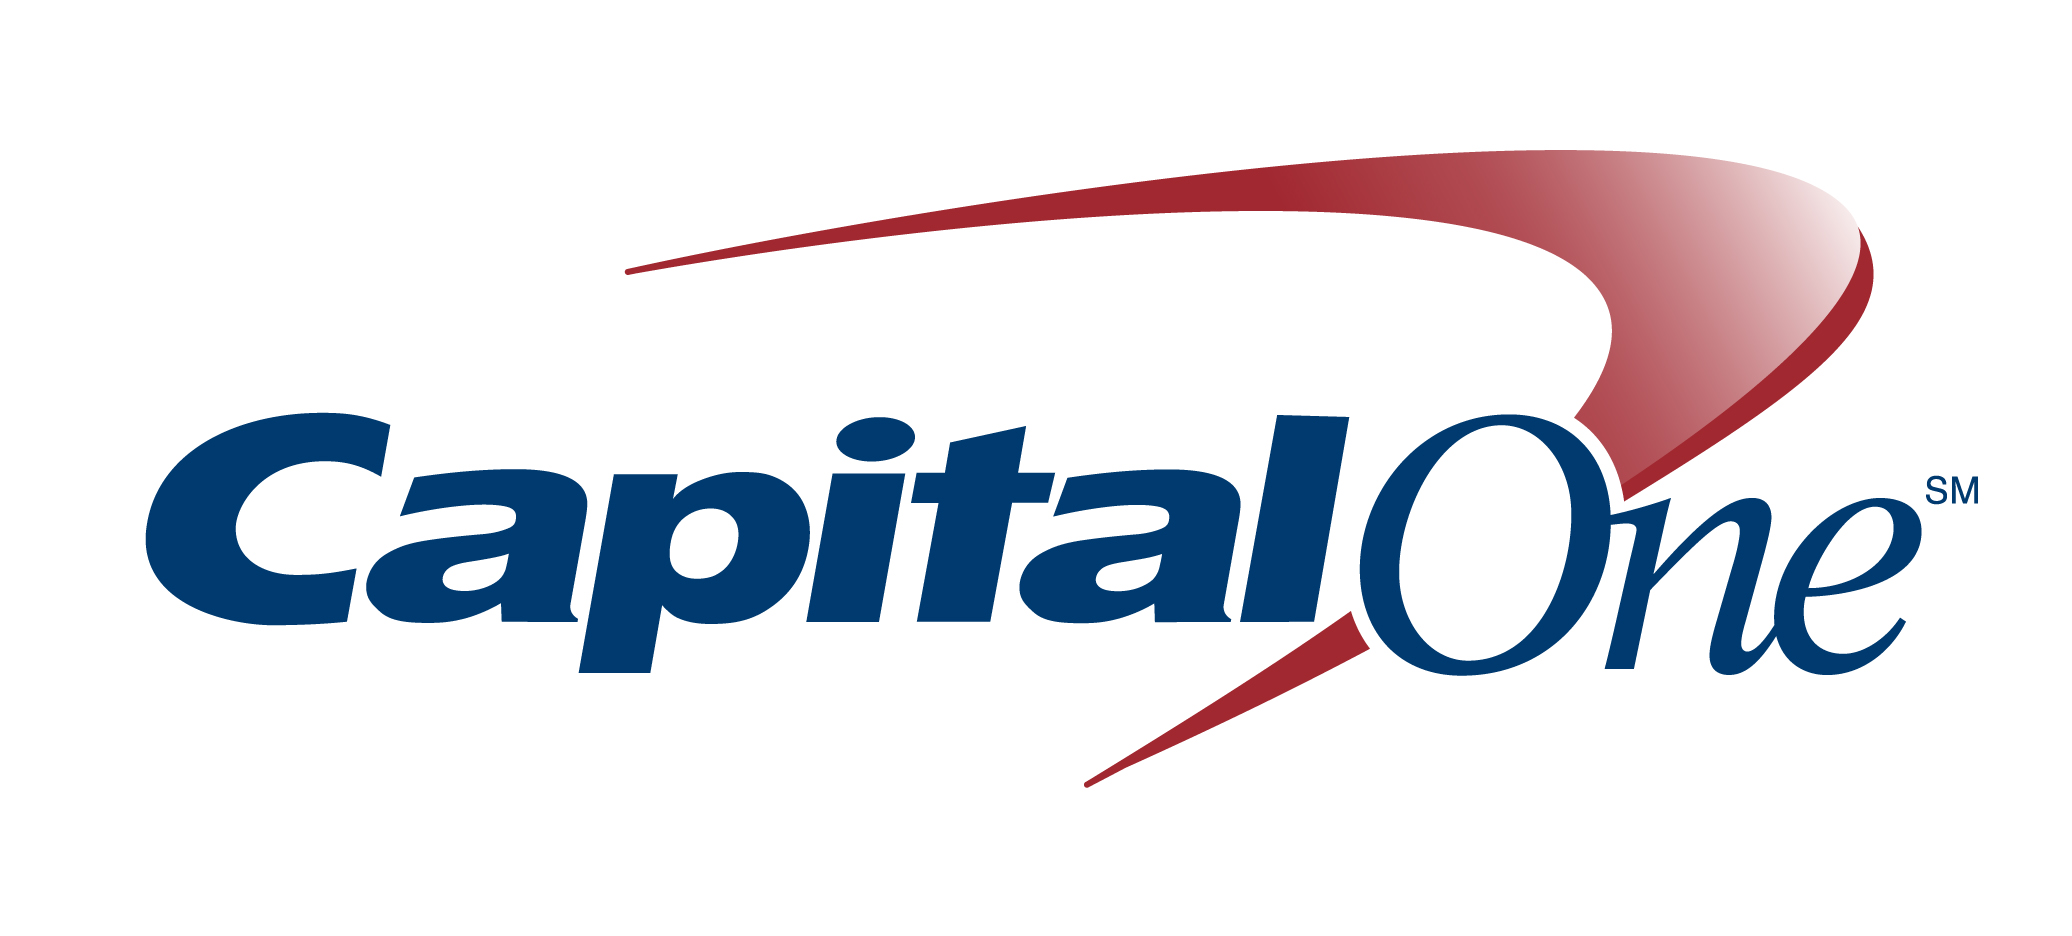 CAPITEL Logo photo - 1